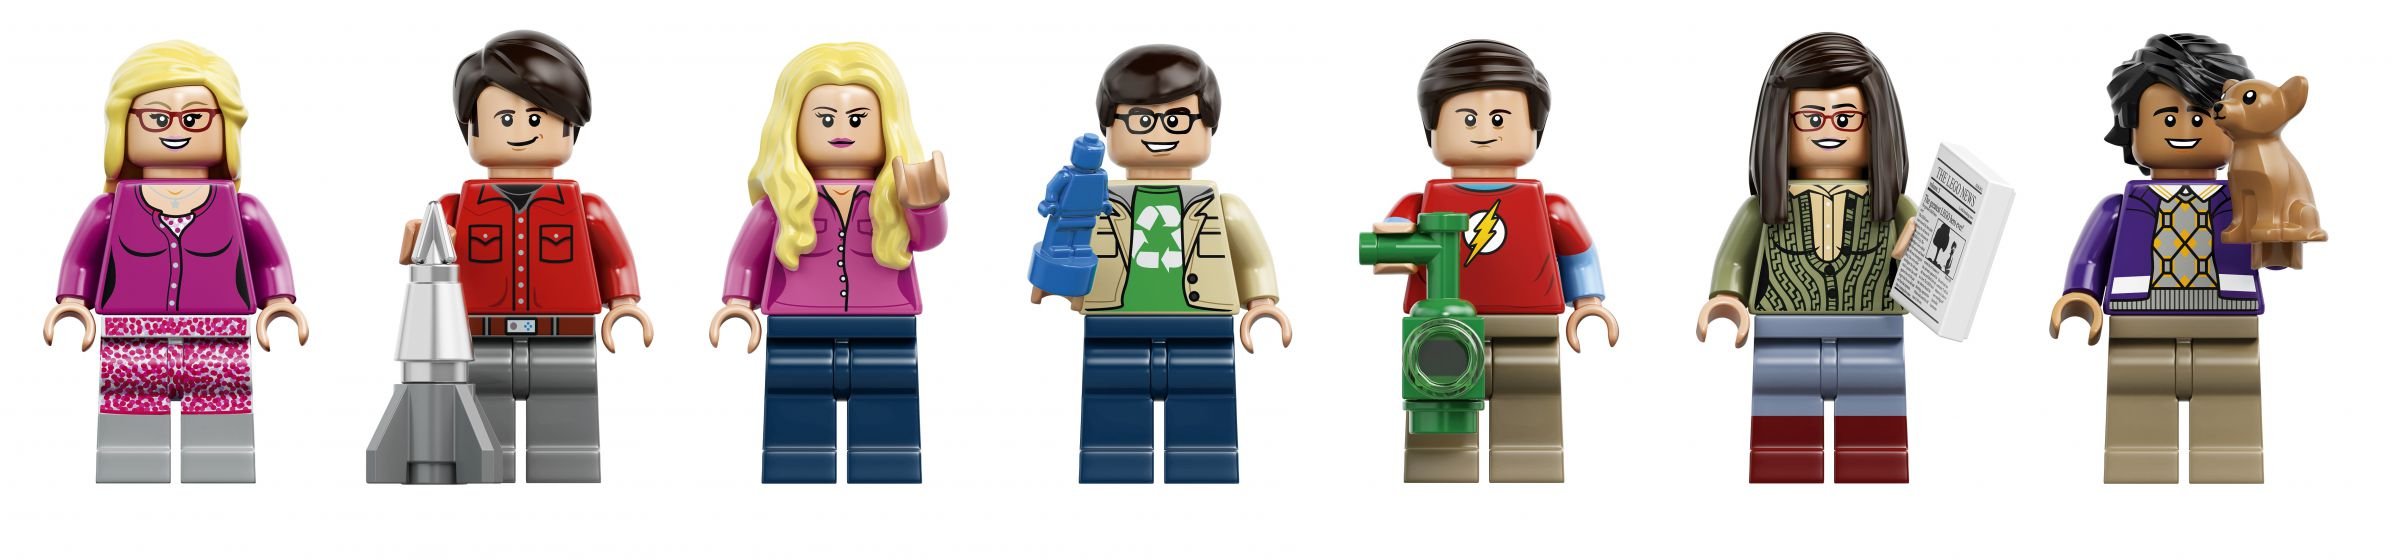 LEGO Ideas 21302 The Big Bang Theory 21302_The-Big-Bang_Theory_LineUP_all.jpg